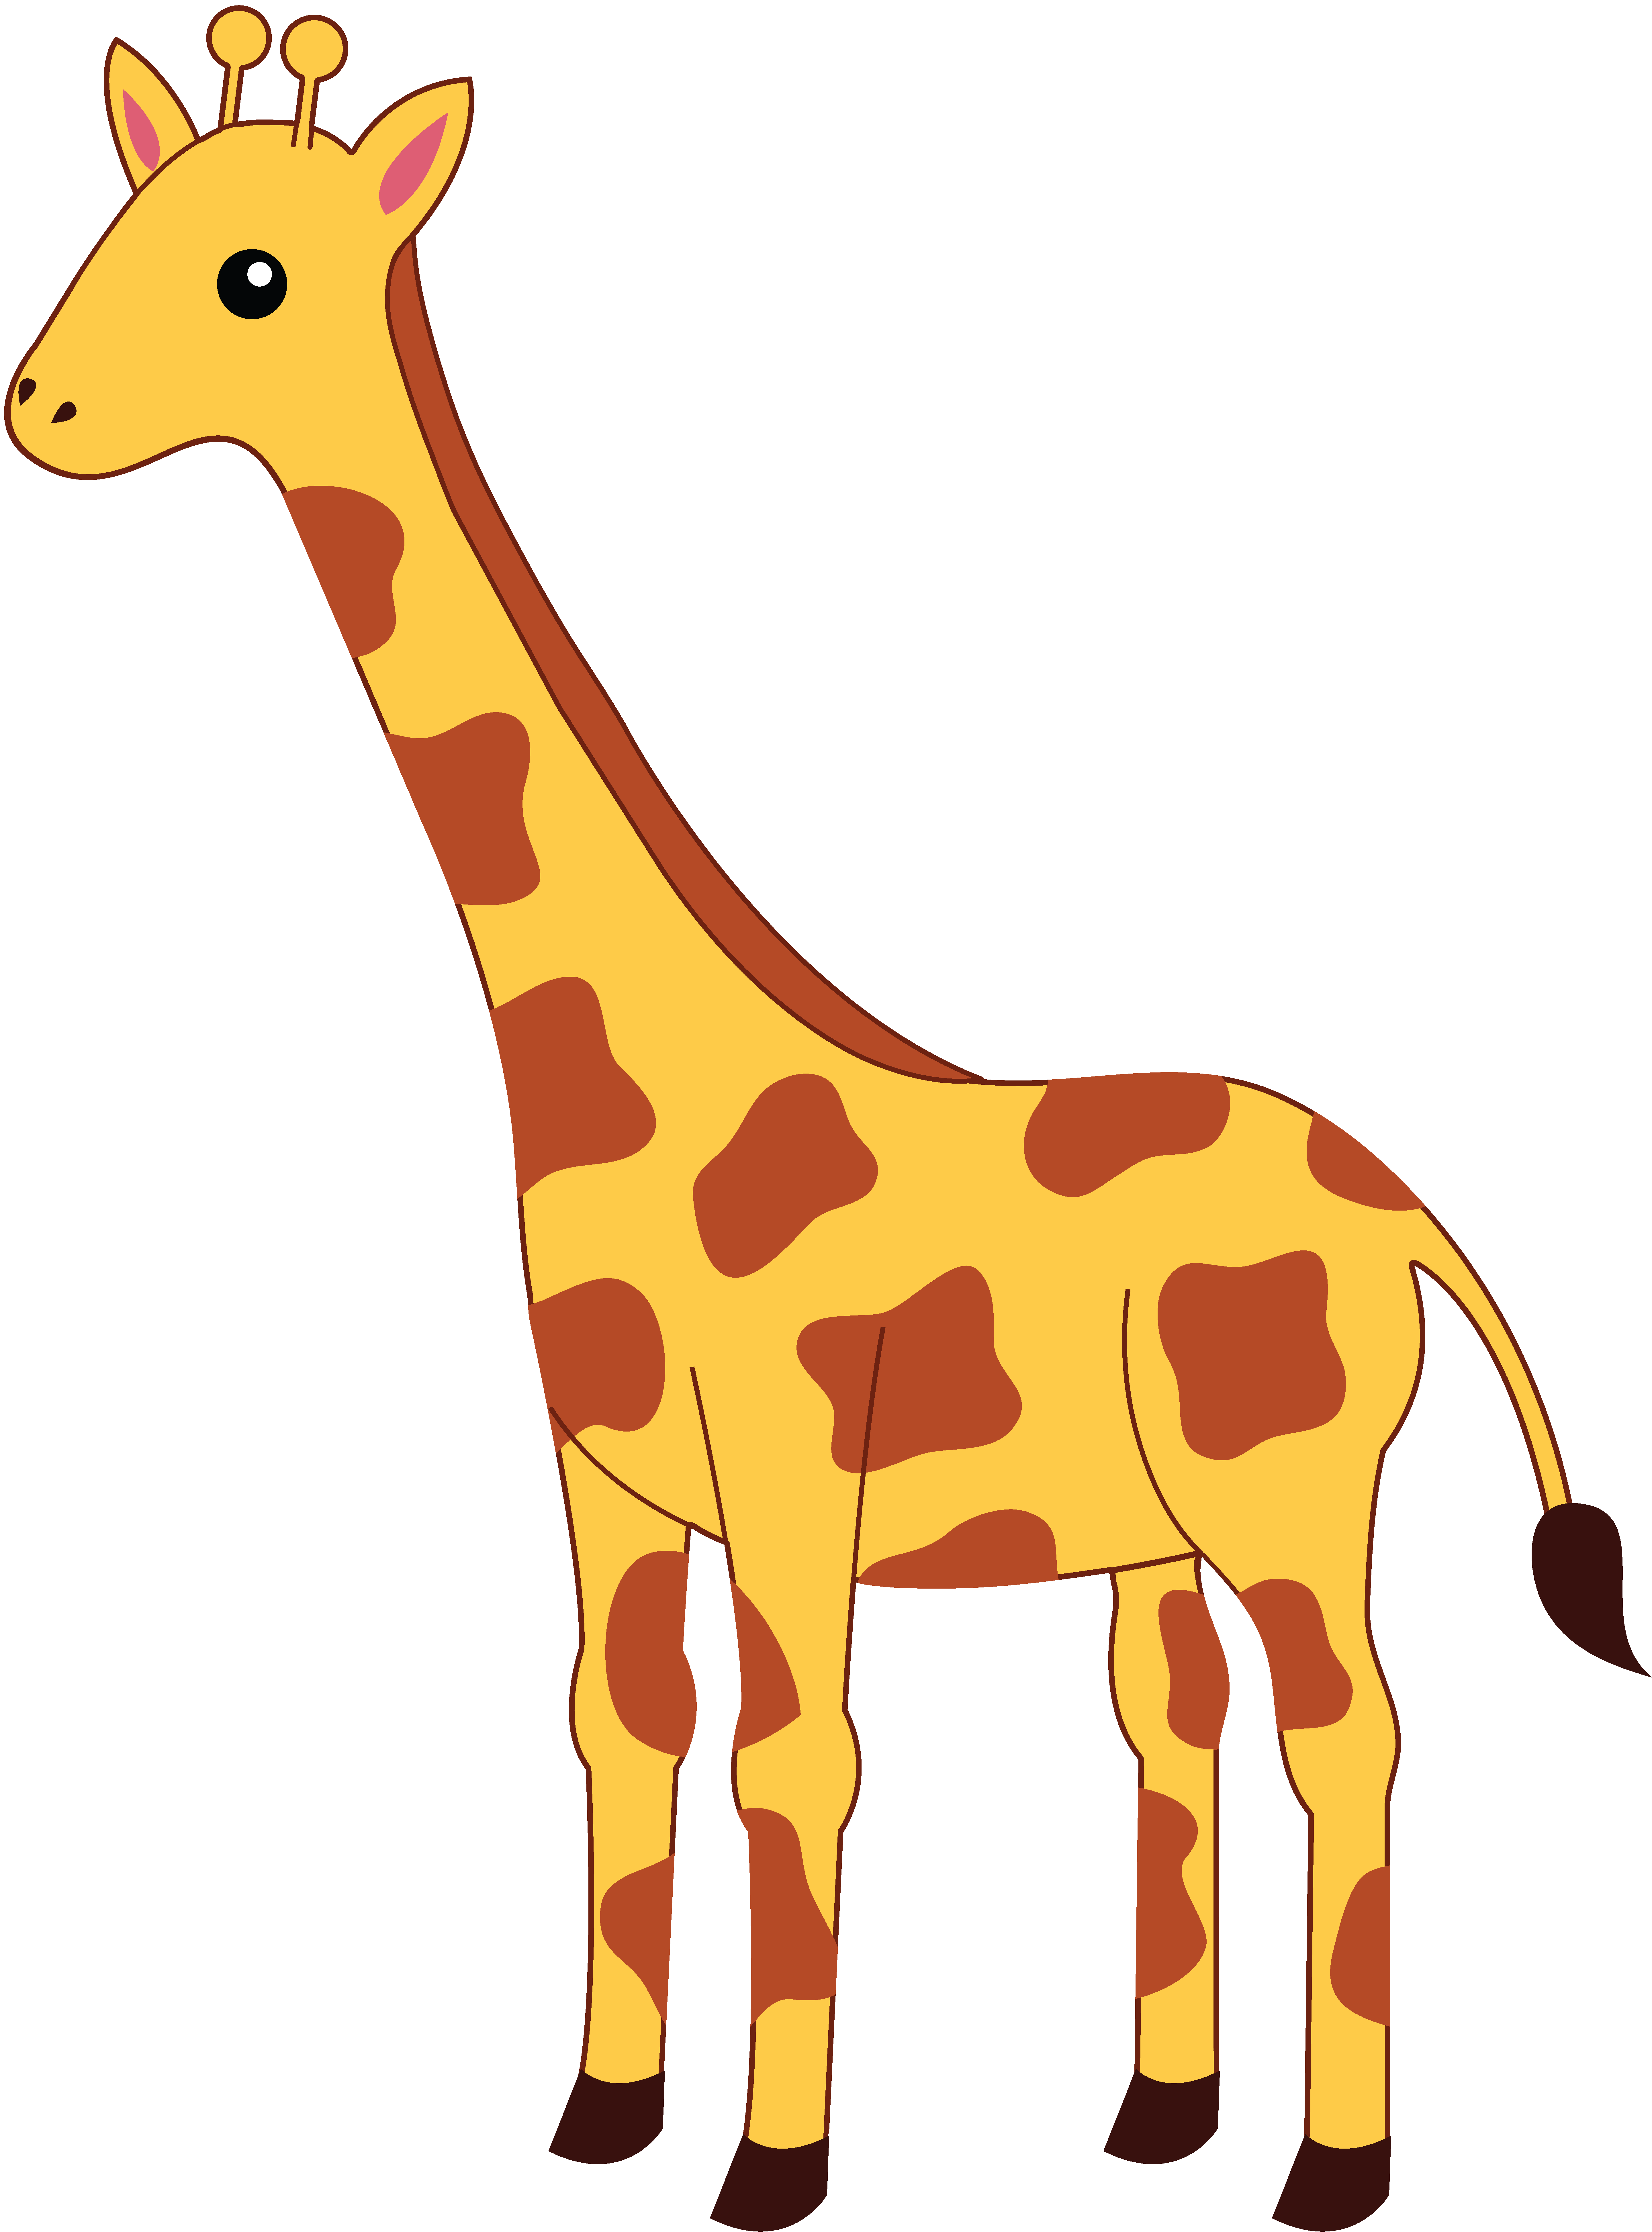 Cartoon Giraffe Clipart - Cliparts.co